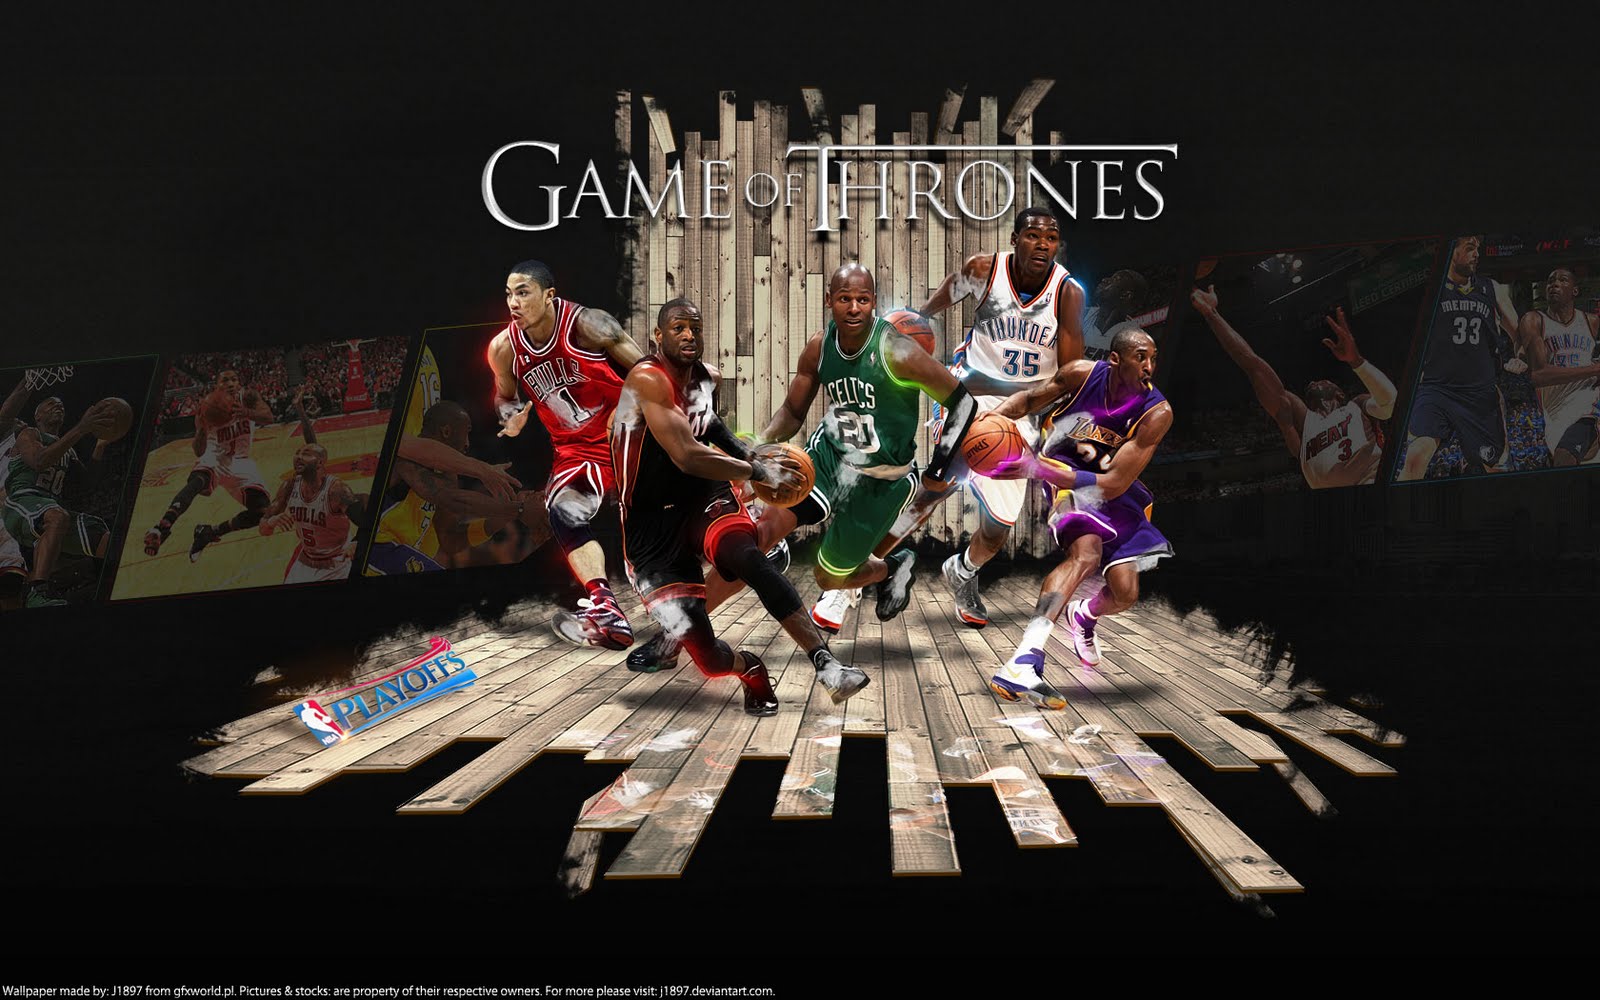 http://4.bp.blogspot.com/-GwM6zjsioFw/Tj7kj4hk5JI/AAAAAAAABTI/sjyxiwUt_UA/s1600/2011-NBA-Playoffs-Game-Of-Thrones-Widescree-Wallpaper.jpg